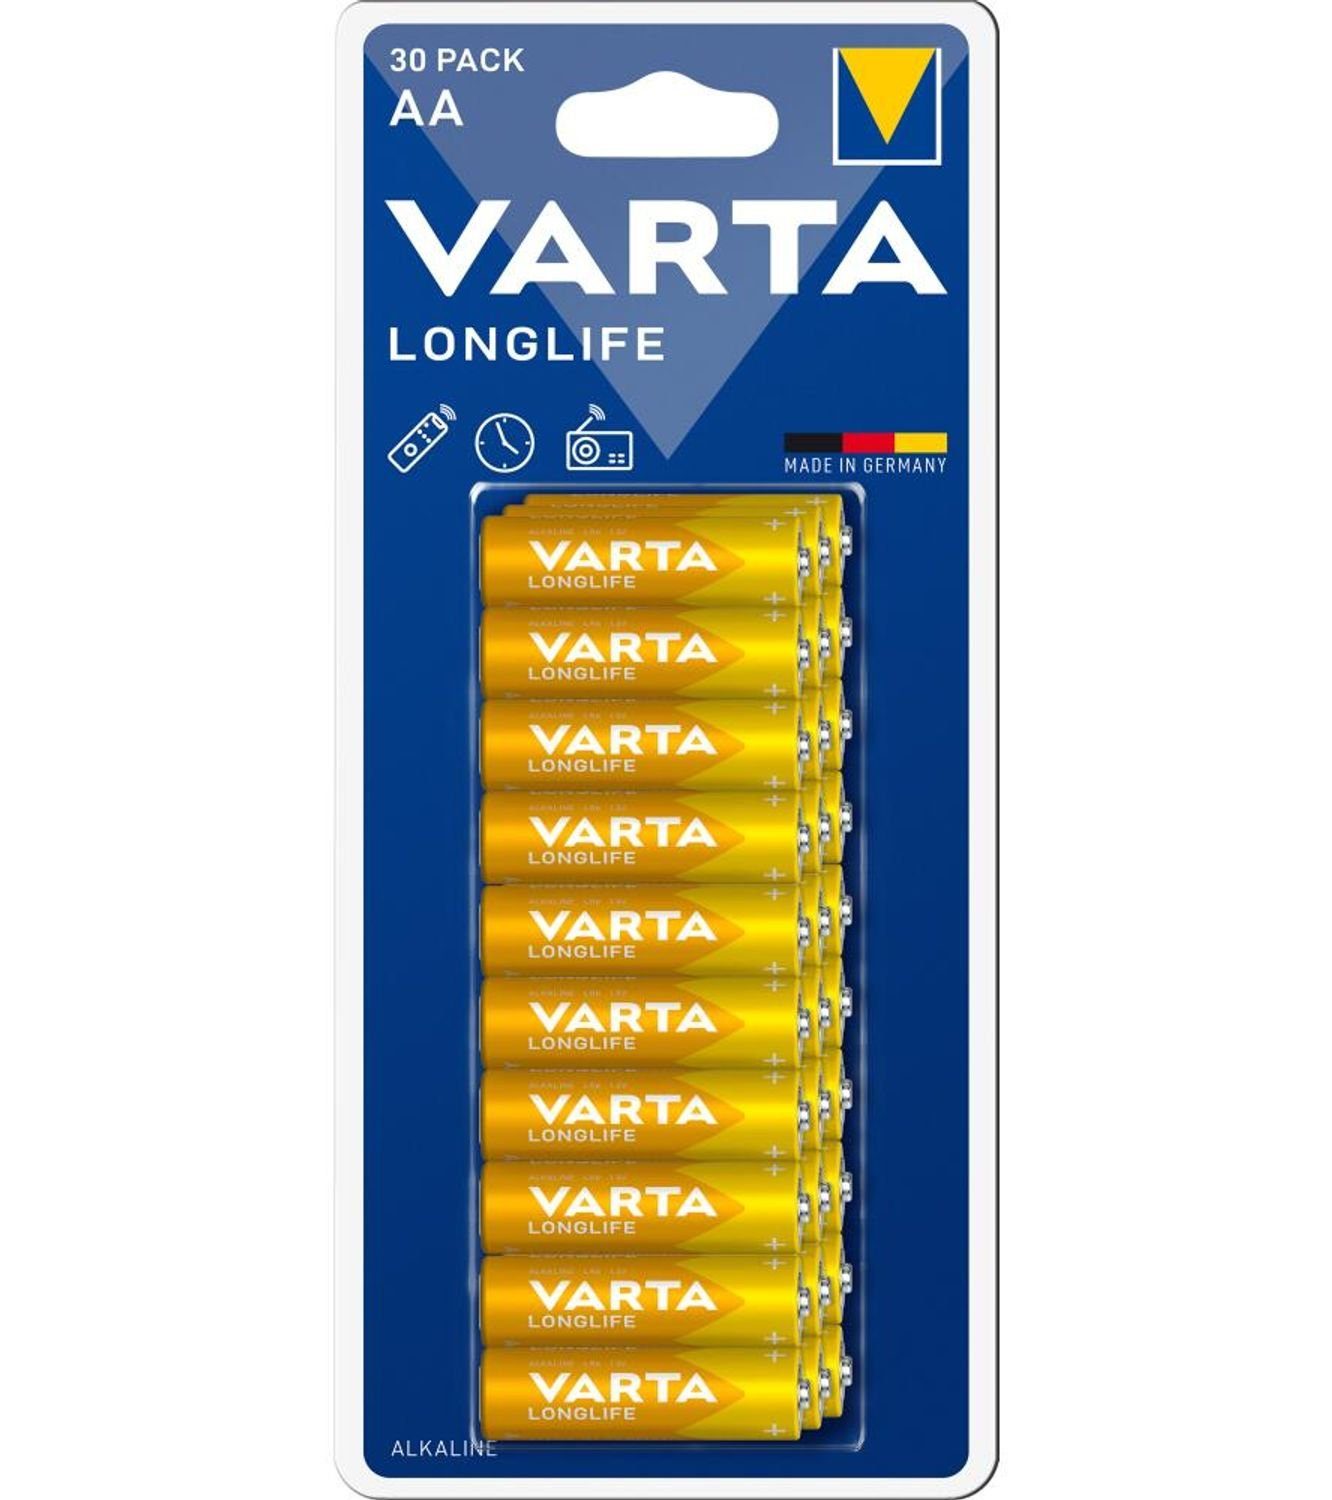 VARTA 12x 30er-Packung Longlife Alkaline-Batterien 3 Batterie, (360 AA LR6 St) 1,5V Großpackung